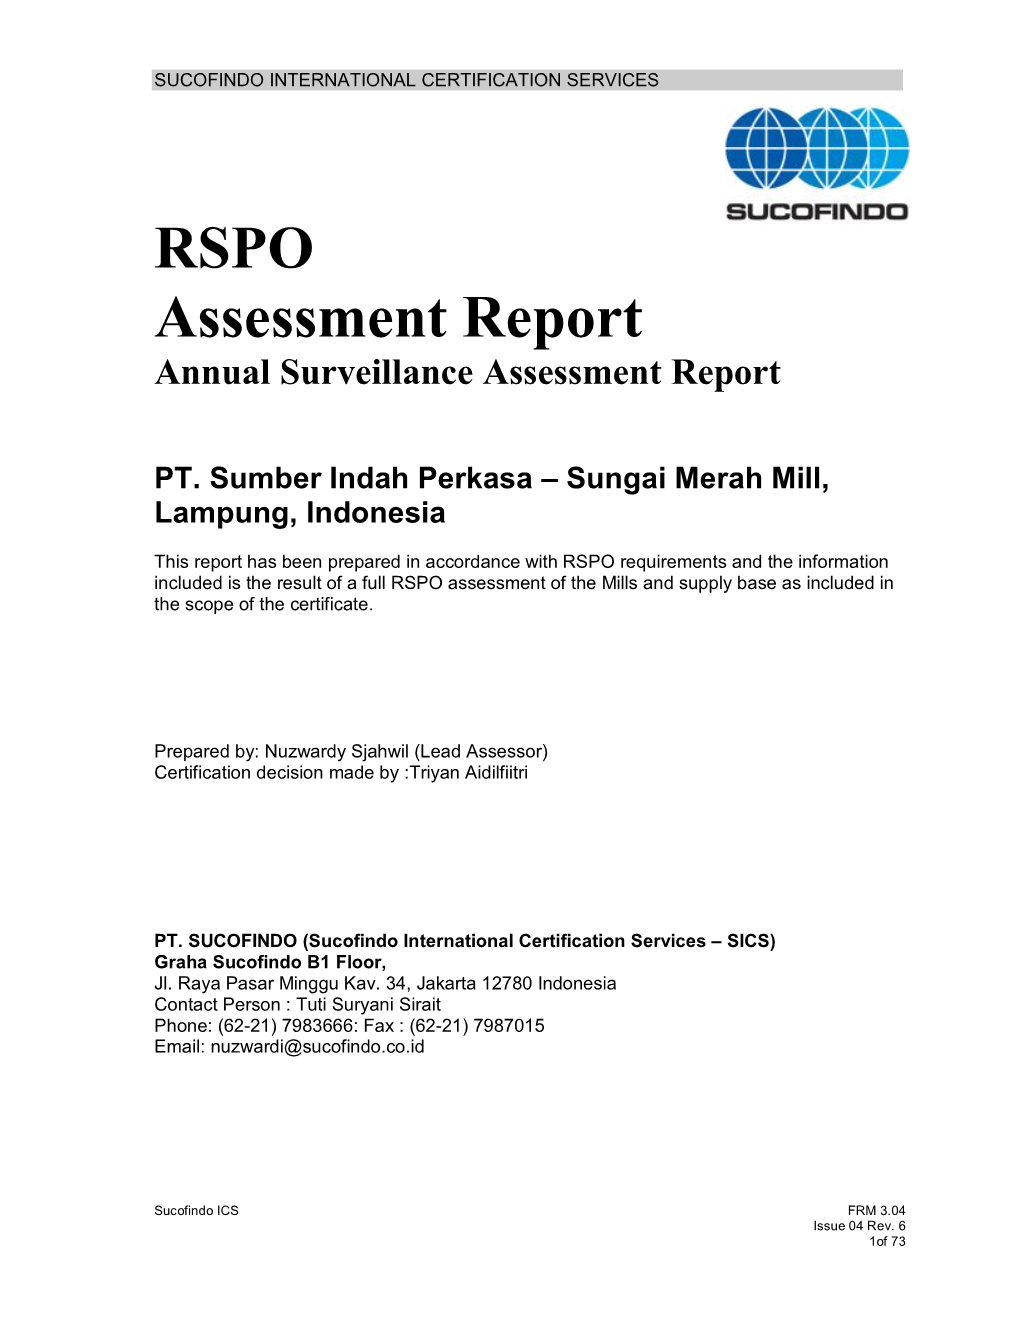 RSPO Assessment Report Annual Surveillance Assessment Report PT. Sumber Indah Perkasa